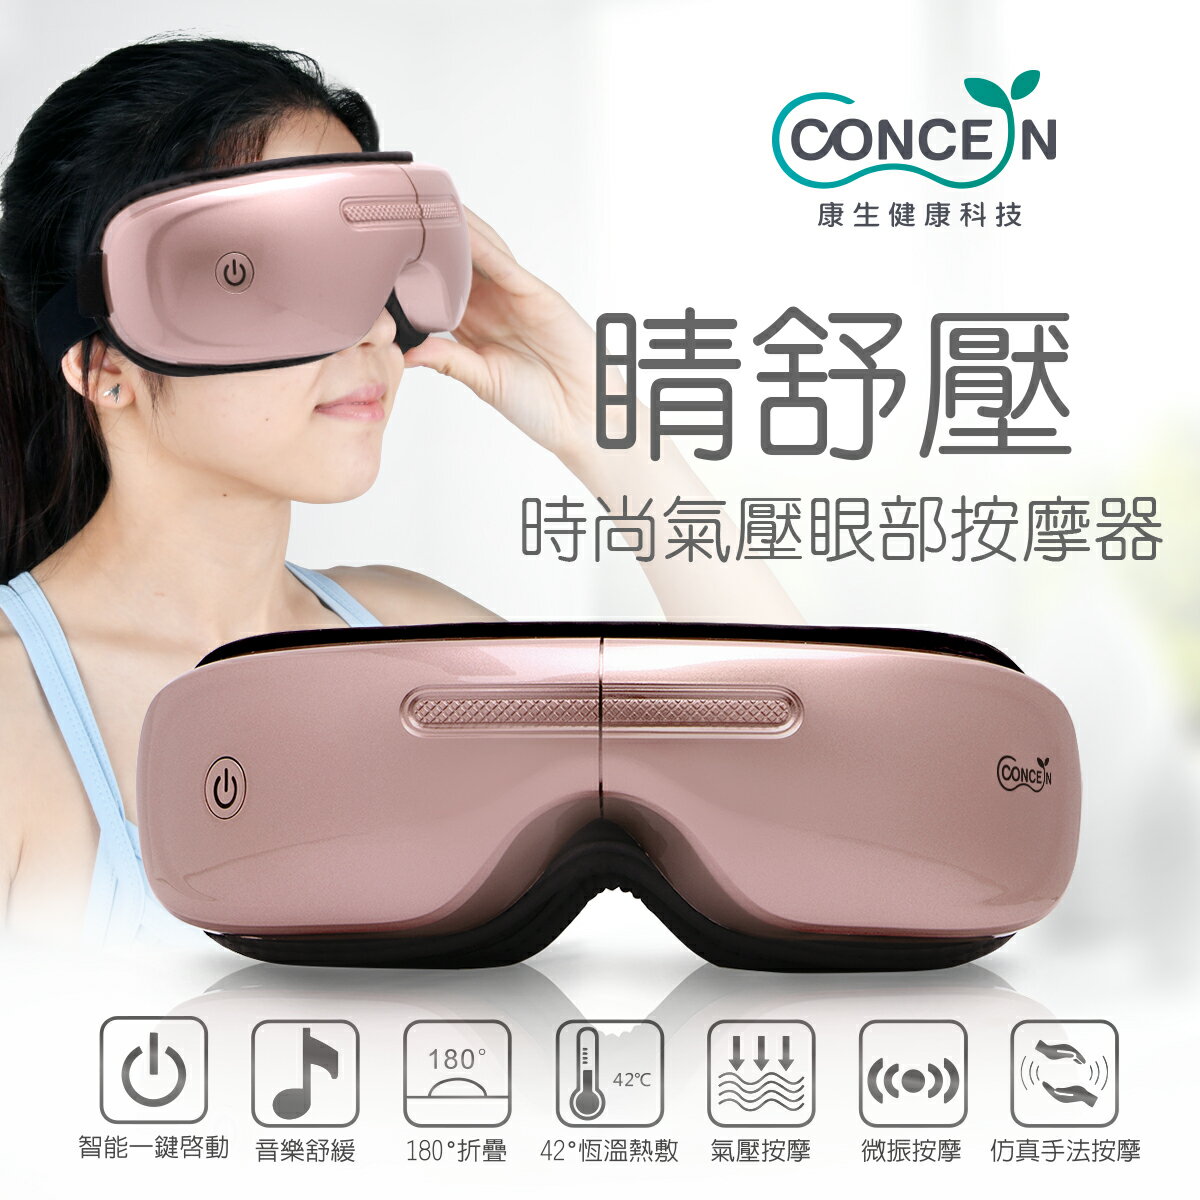 【Concern康生】睛舒壓 時尚氣壓眼部按摩器 CON-555